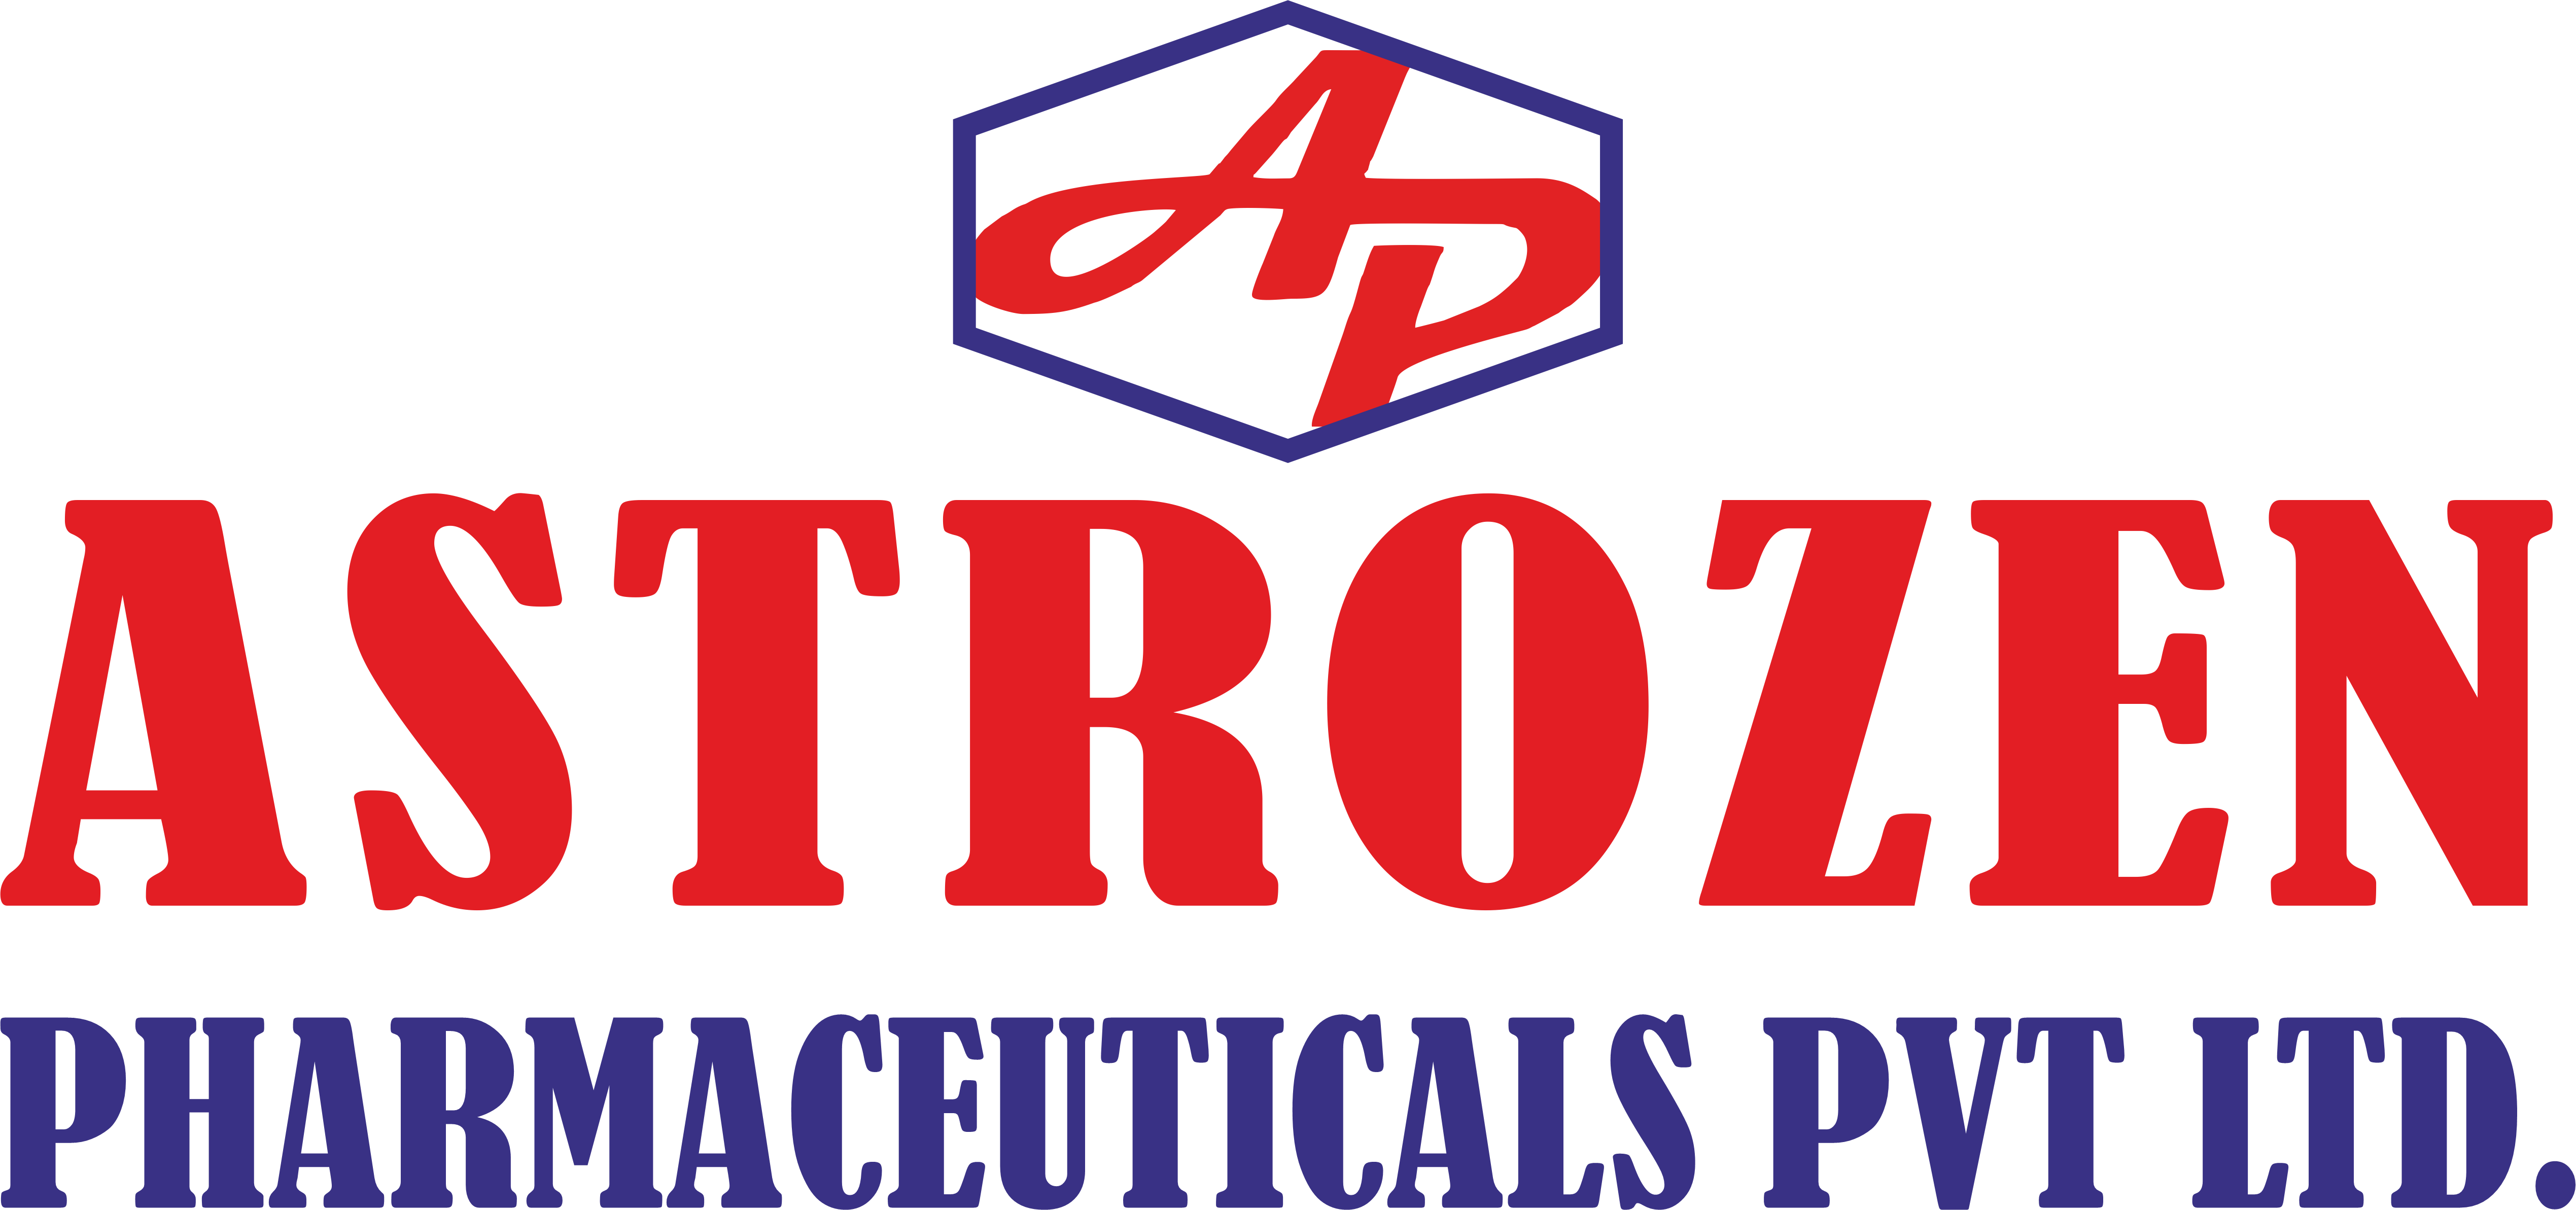 Astrozen Pharmaceuticals Pvt.Ltd.